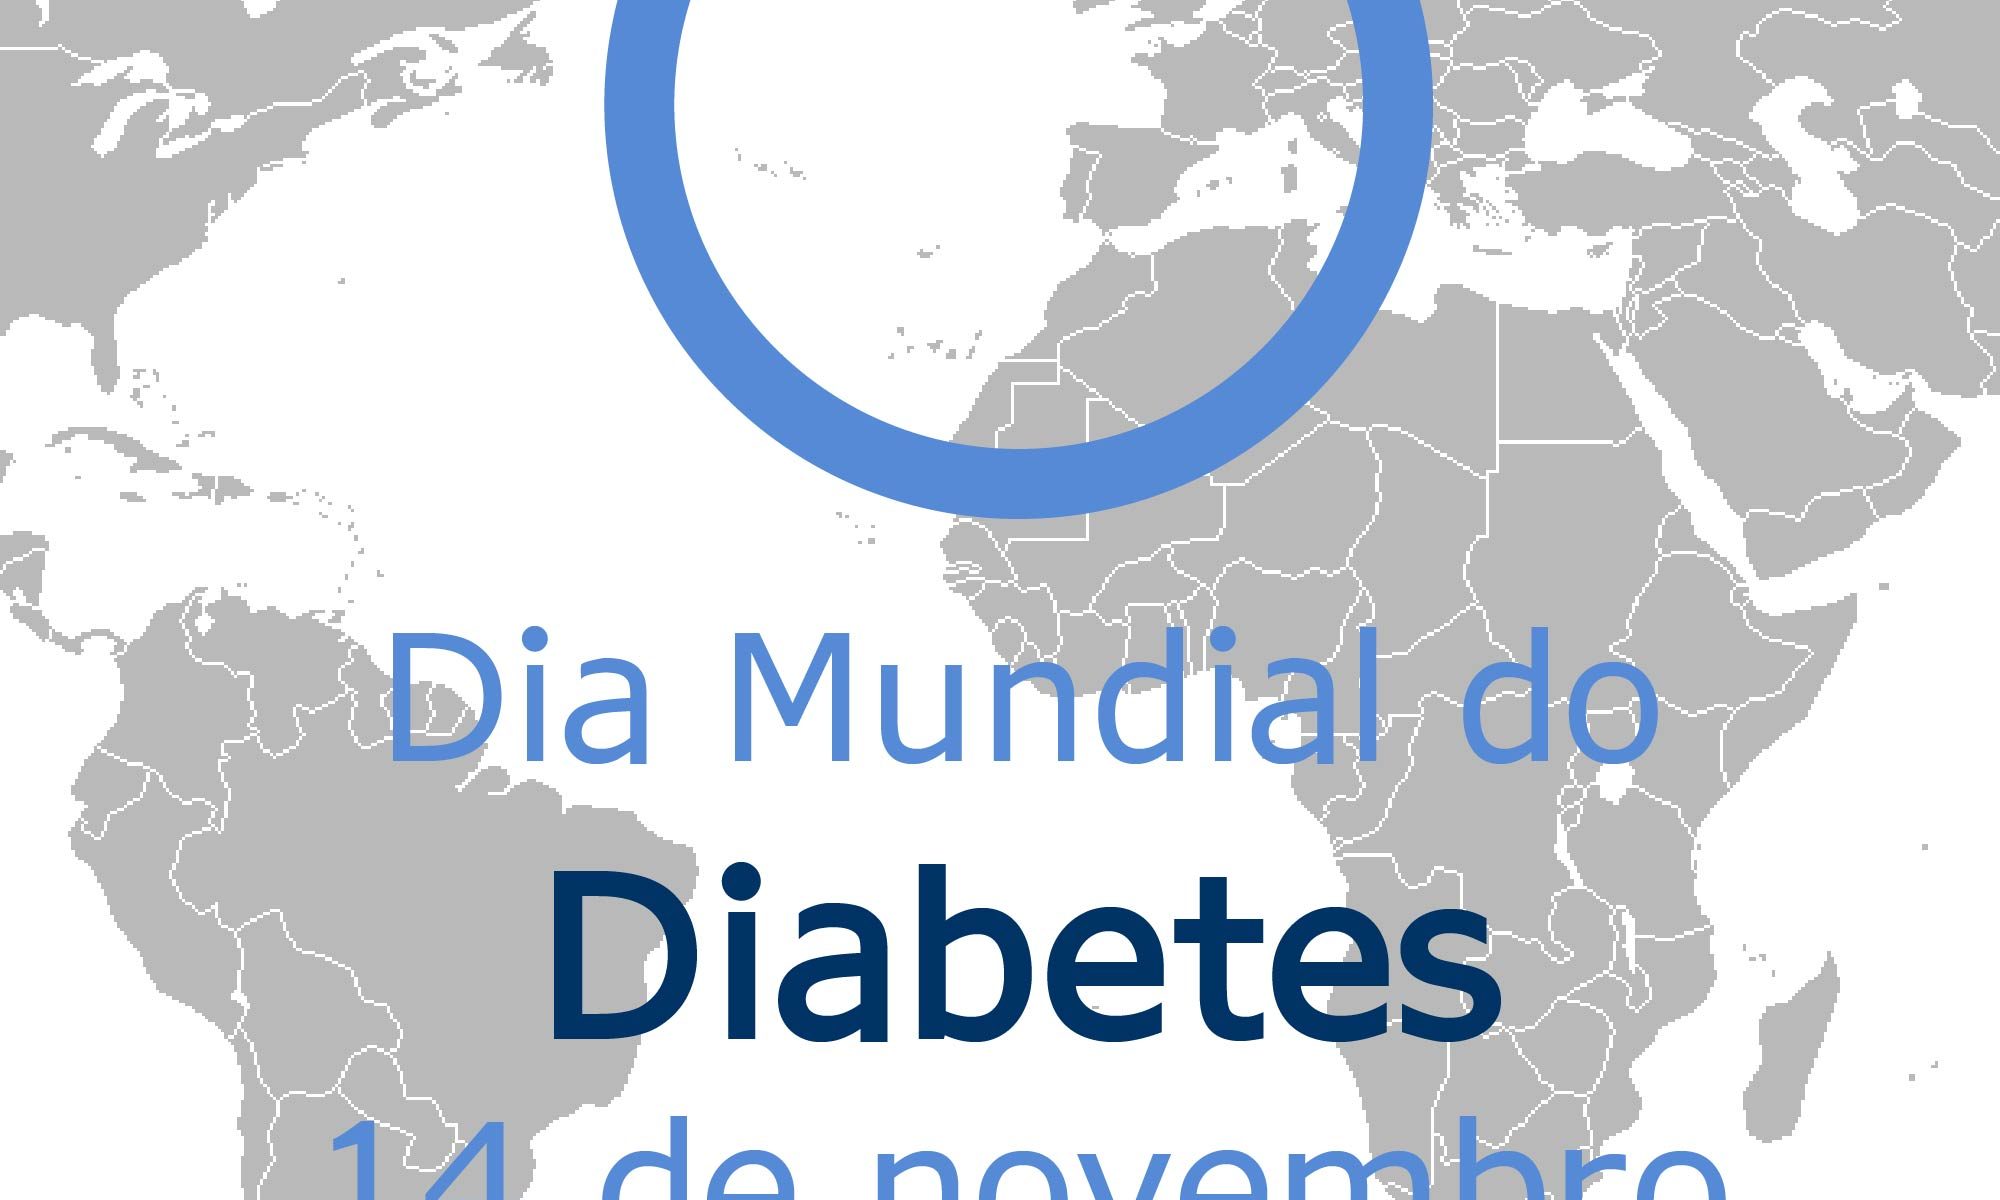 no fundo há m mapa mundi de mercator em tons branco e cinza. Há o círculo azul do Diabetes e está escrito: "14 de novembro Dia Mundial do Diabetes" há ainda as logos da Retina Brasil e da Novarits